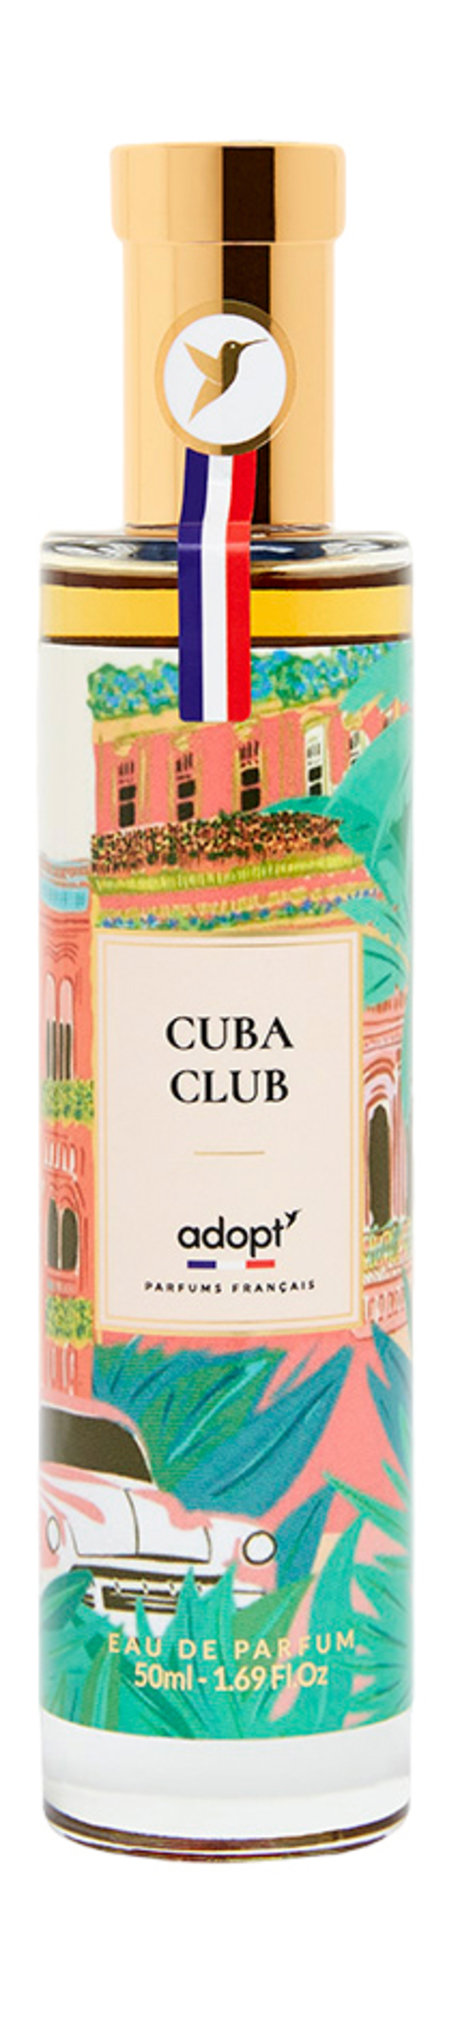 adopt cuba club eau de parfum